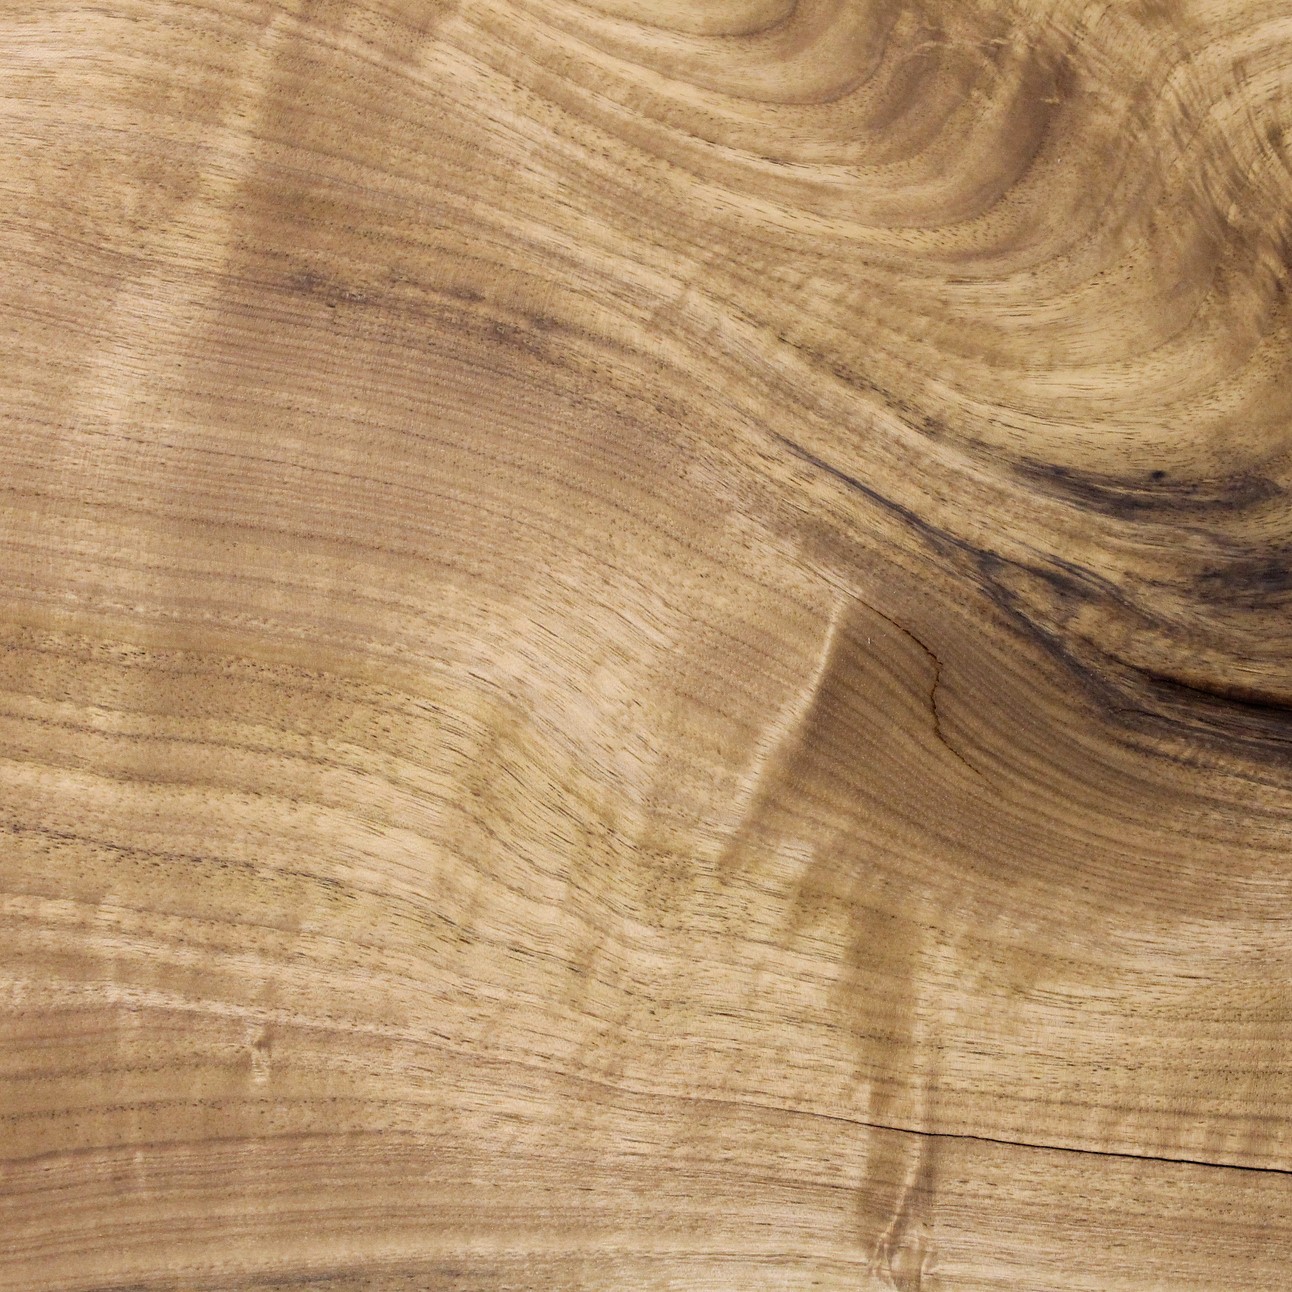 Sample of butternut tree wood texture